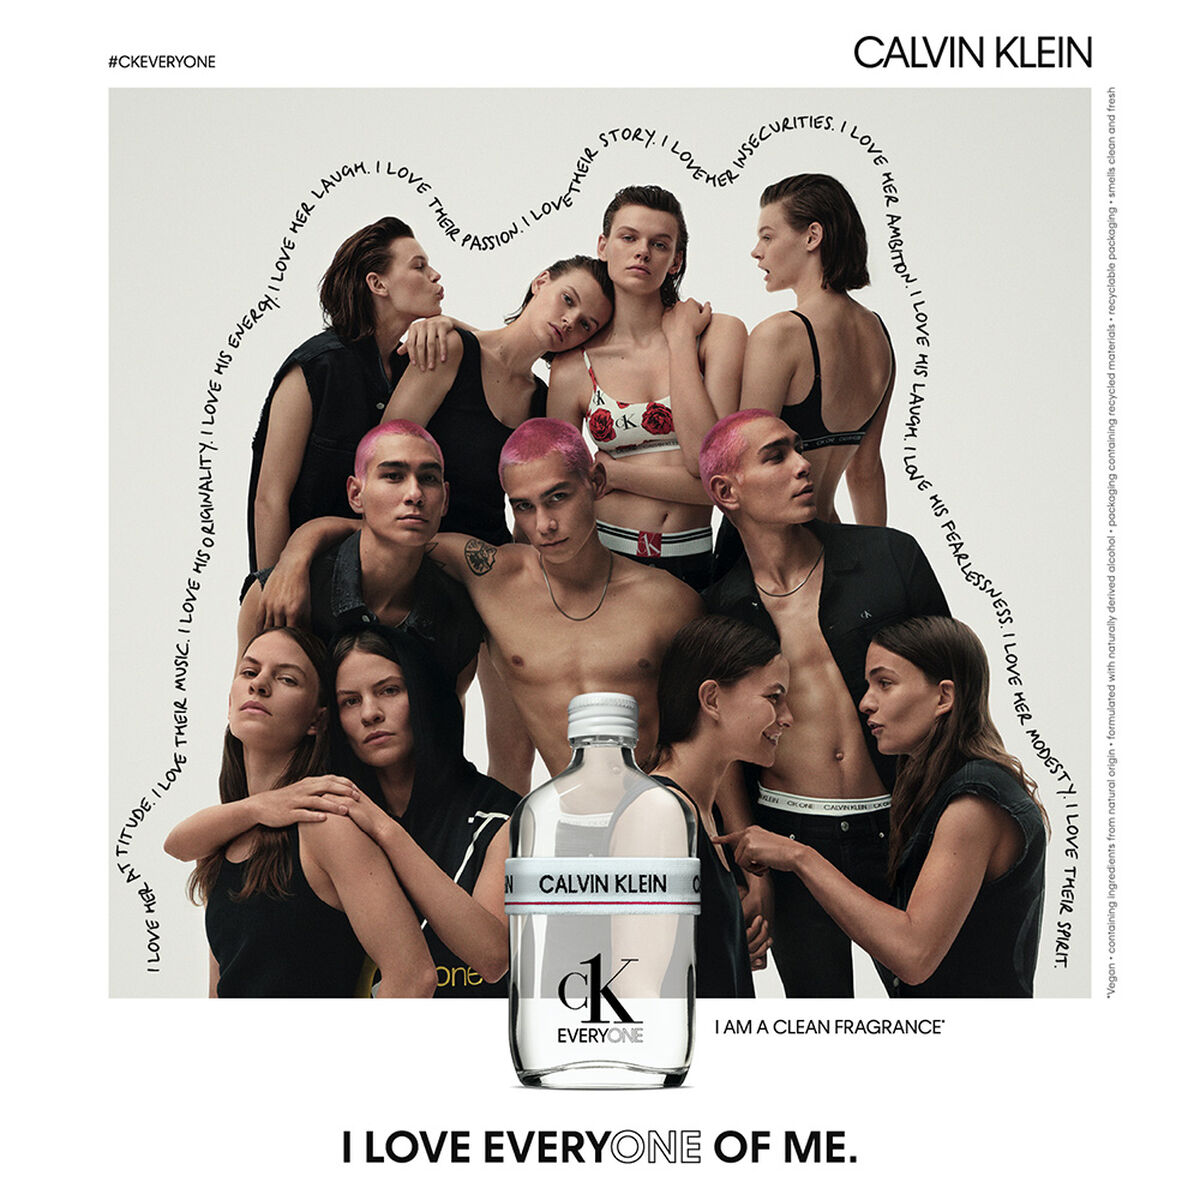 Perfume Calvin Klein CK Everyone EDT 100 ml